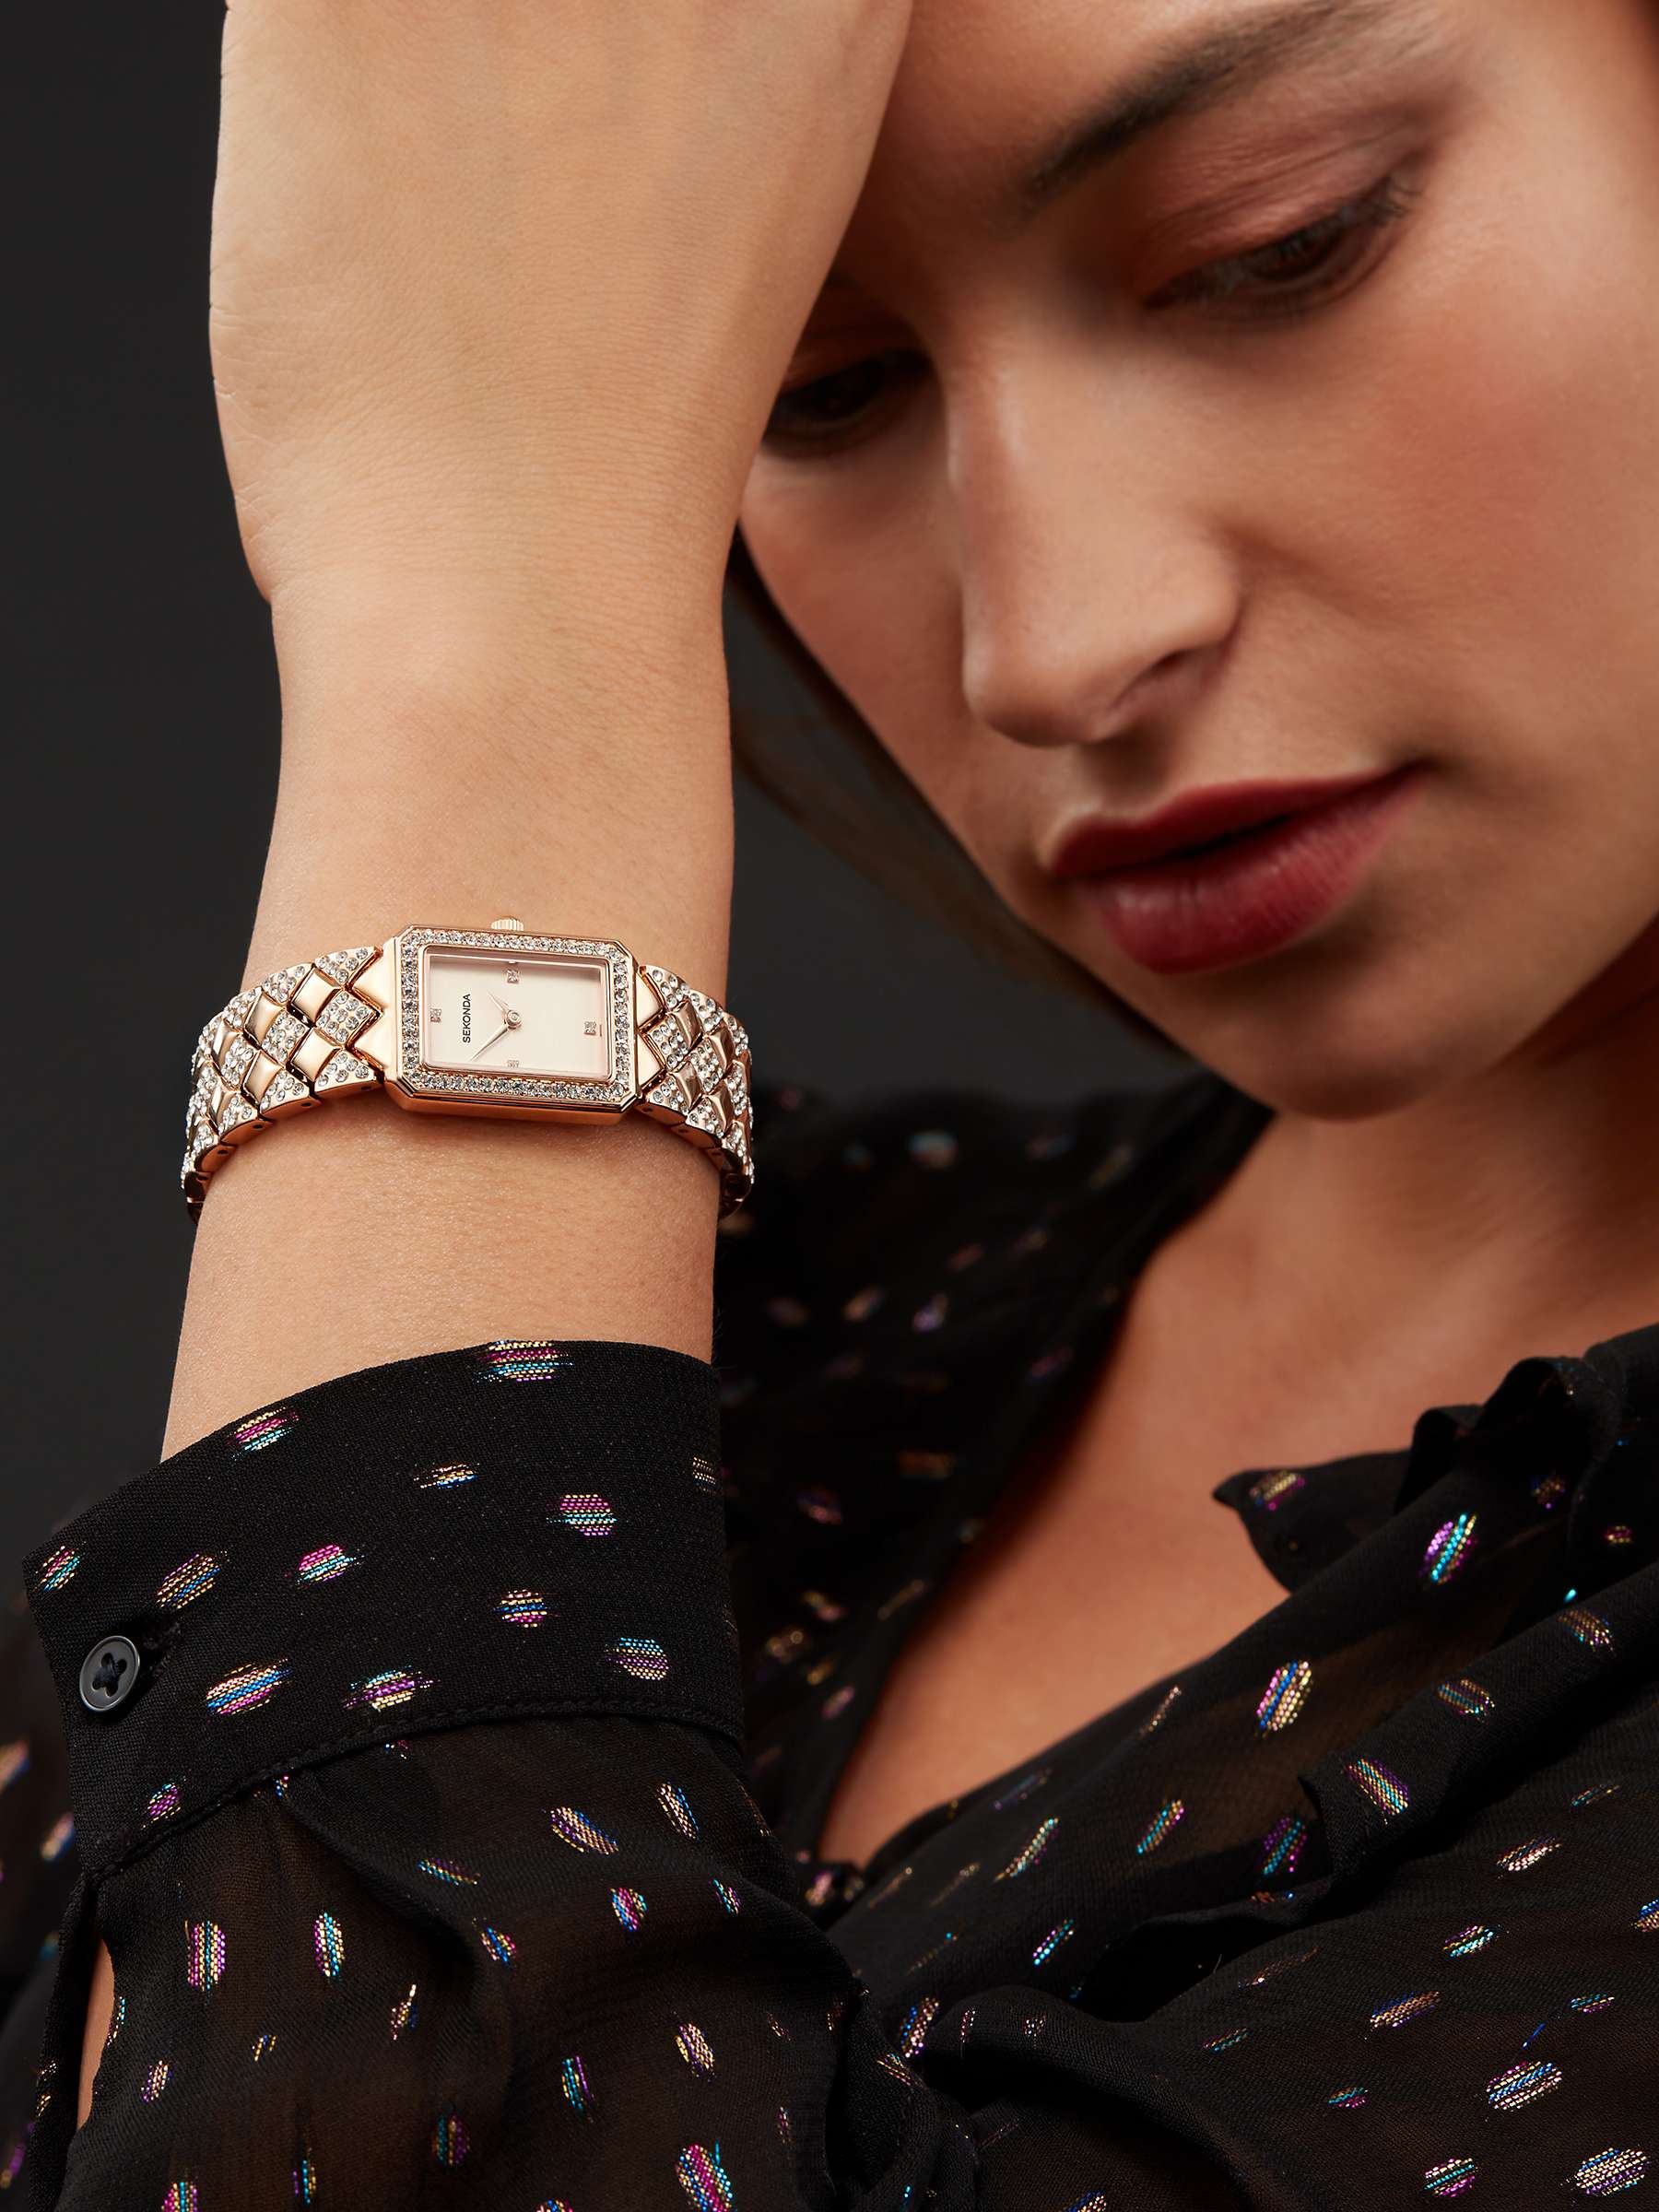 Buy Sekonda Women's Crystal Bracelet Strap Watch Online at johnlewis.com